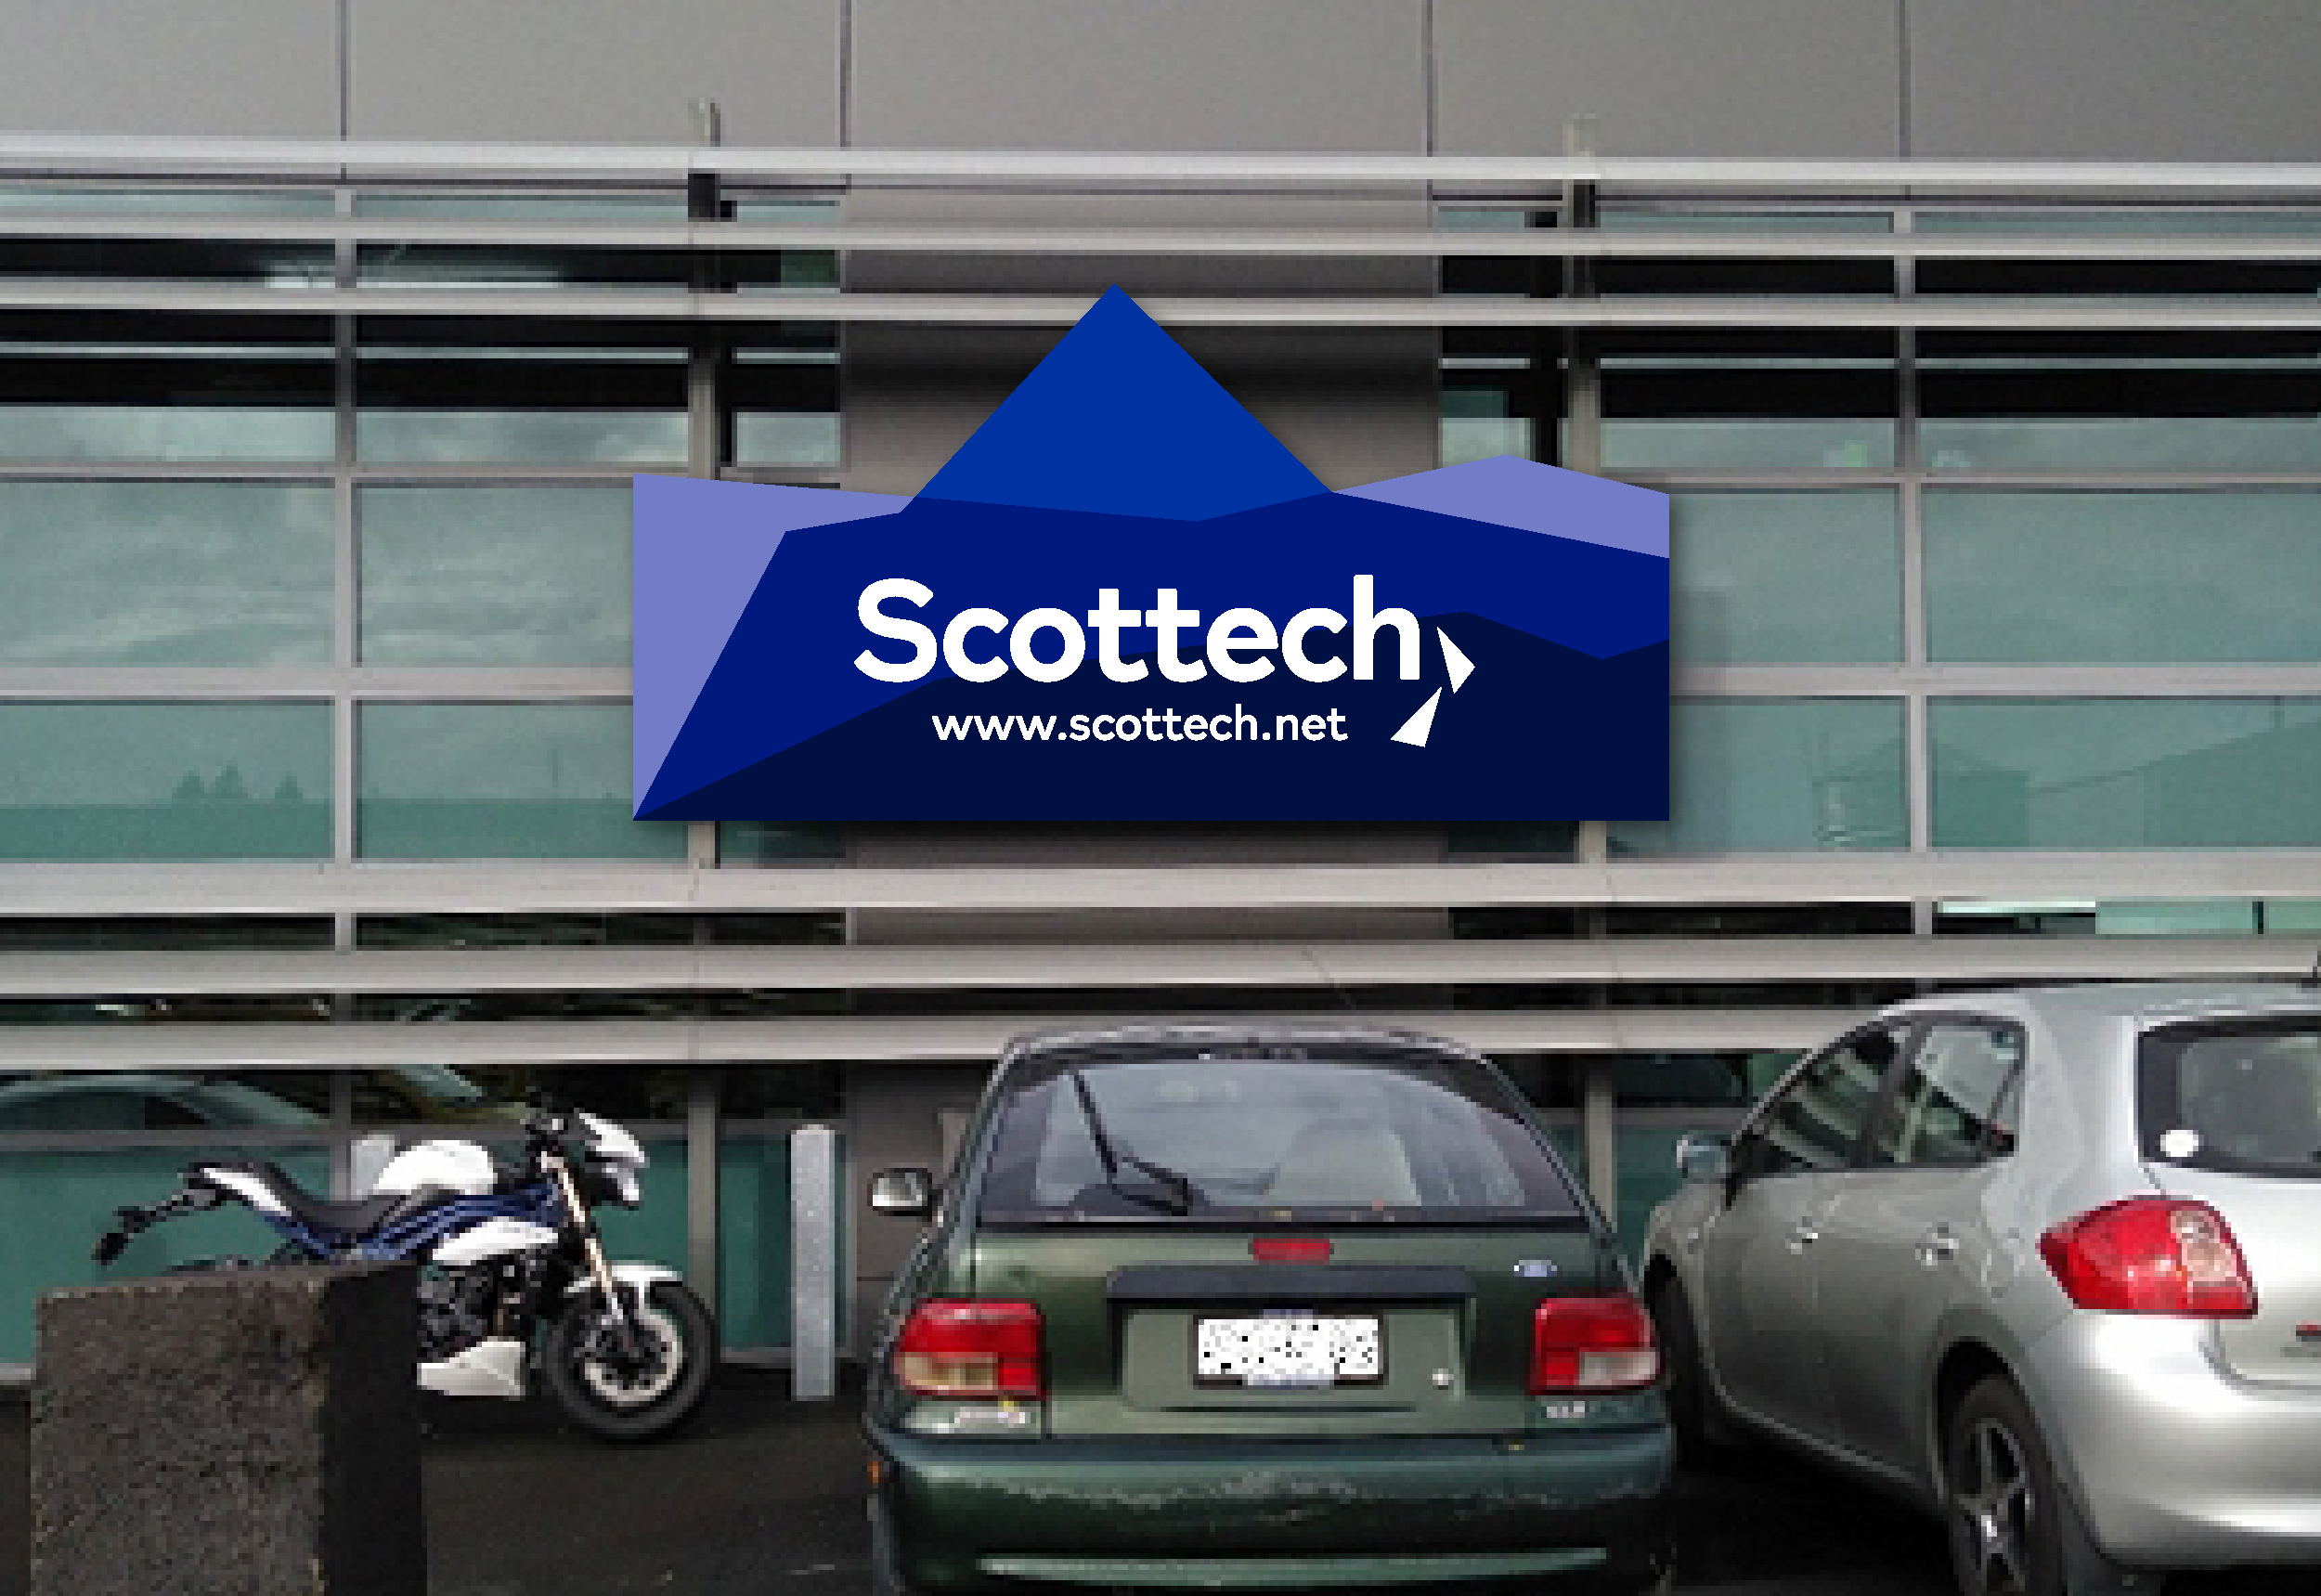 Scottech building sign